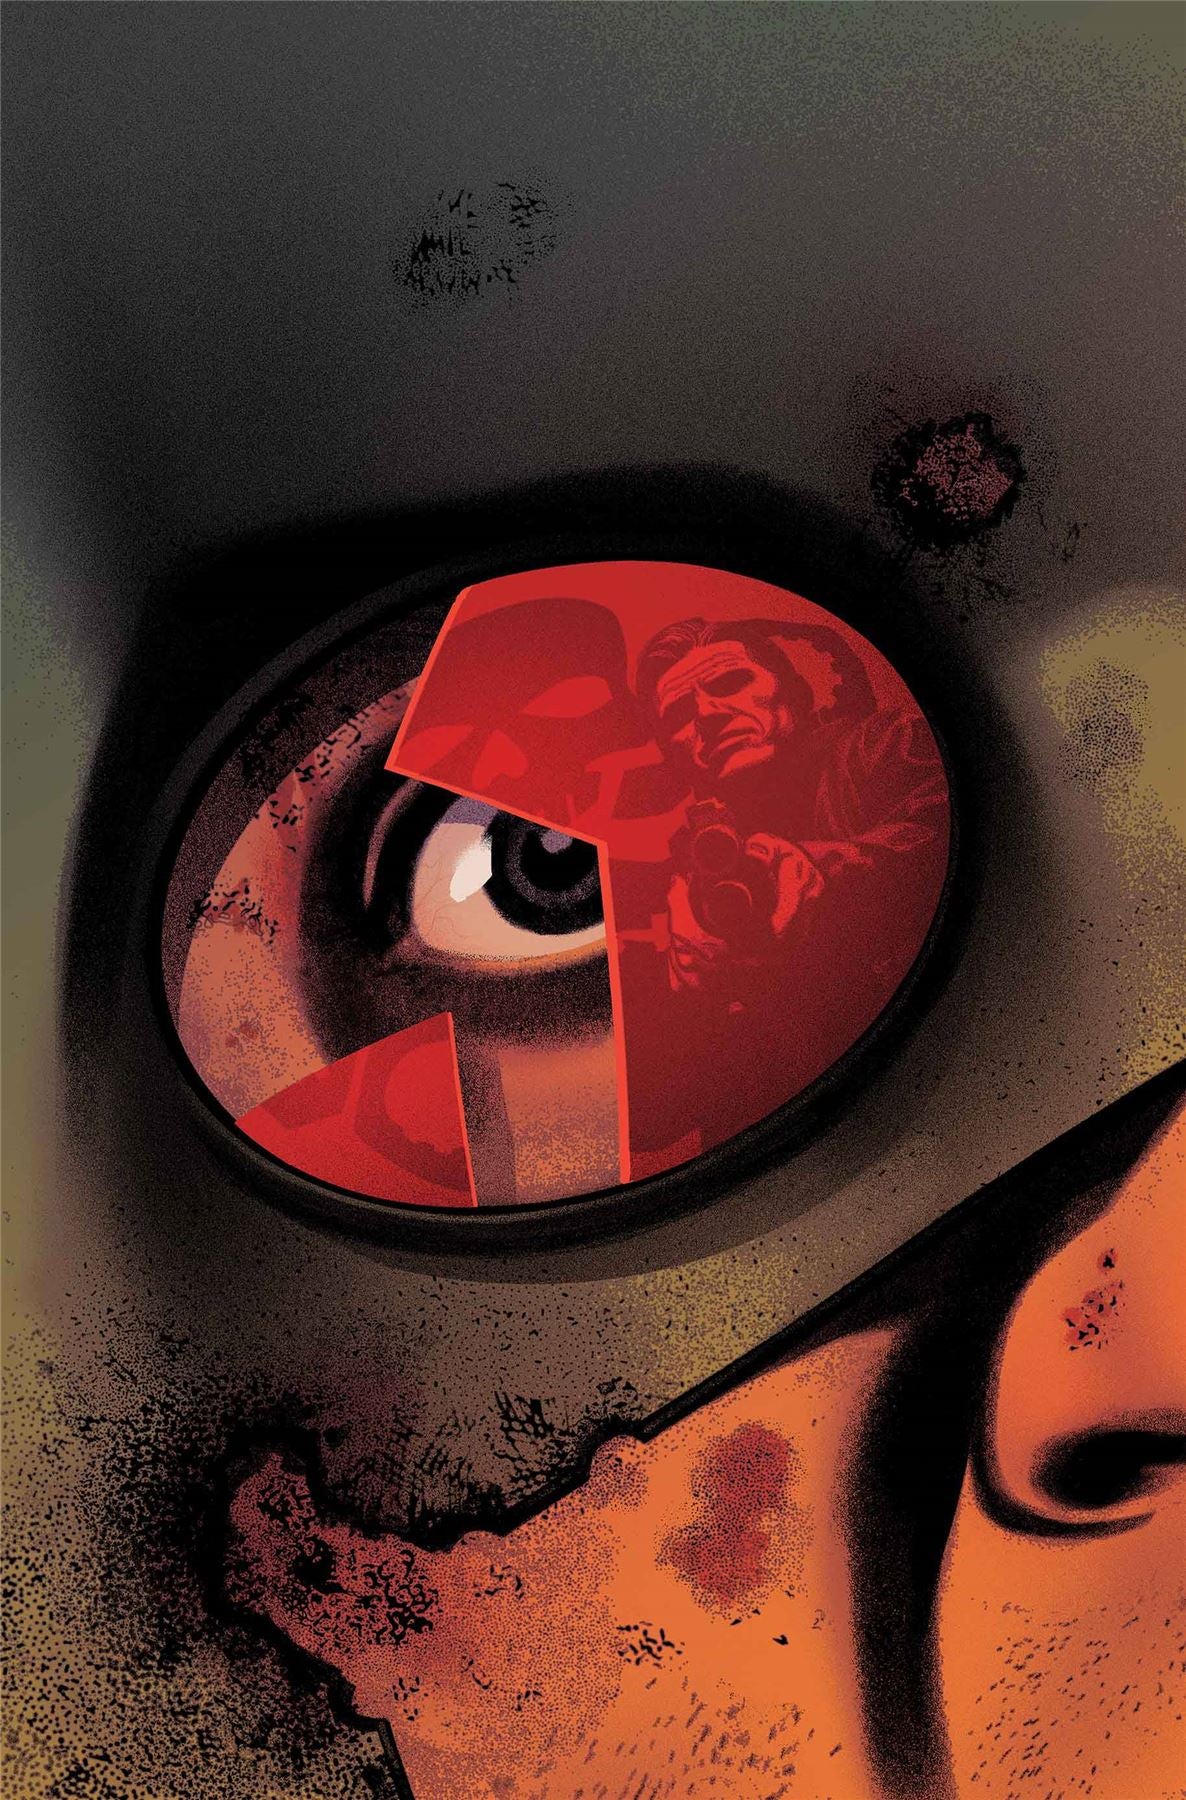 Punisher #9 Marvel Comics Comic Book